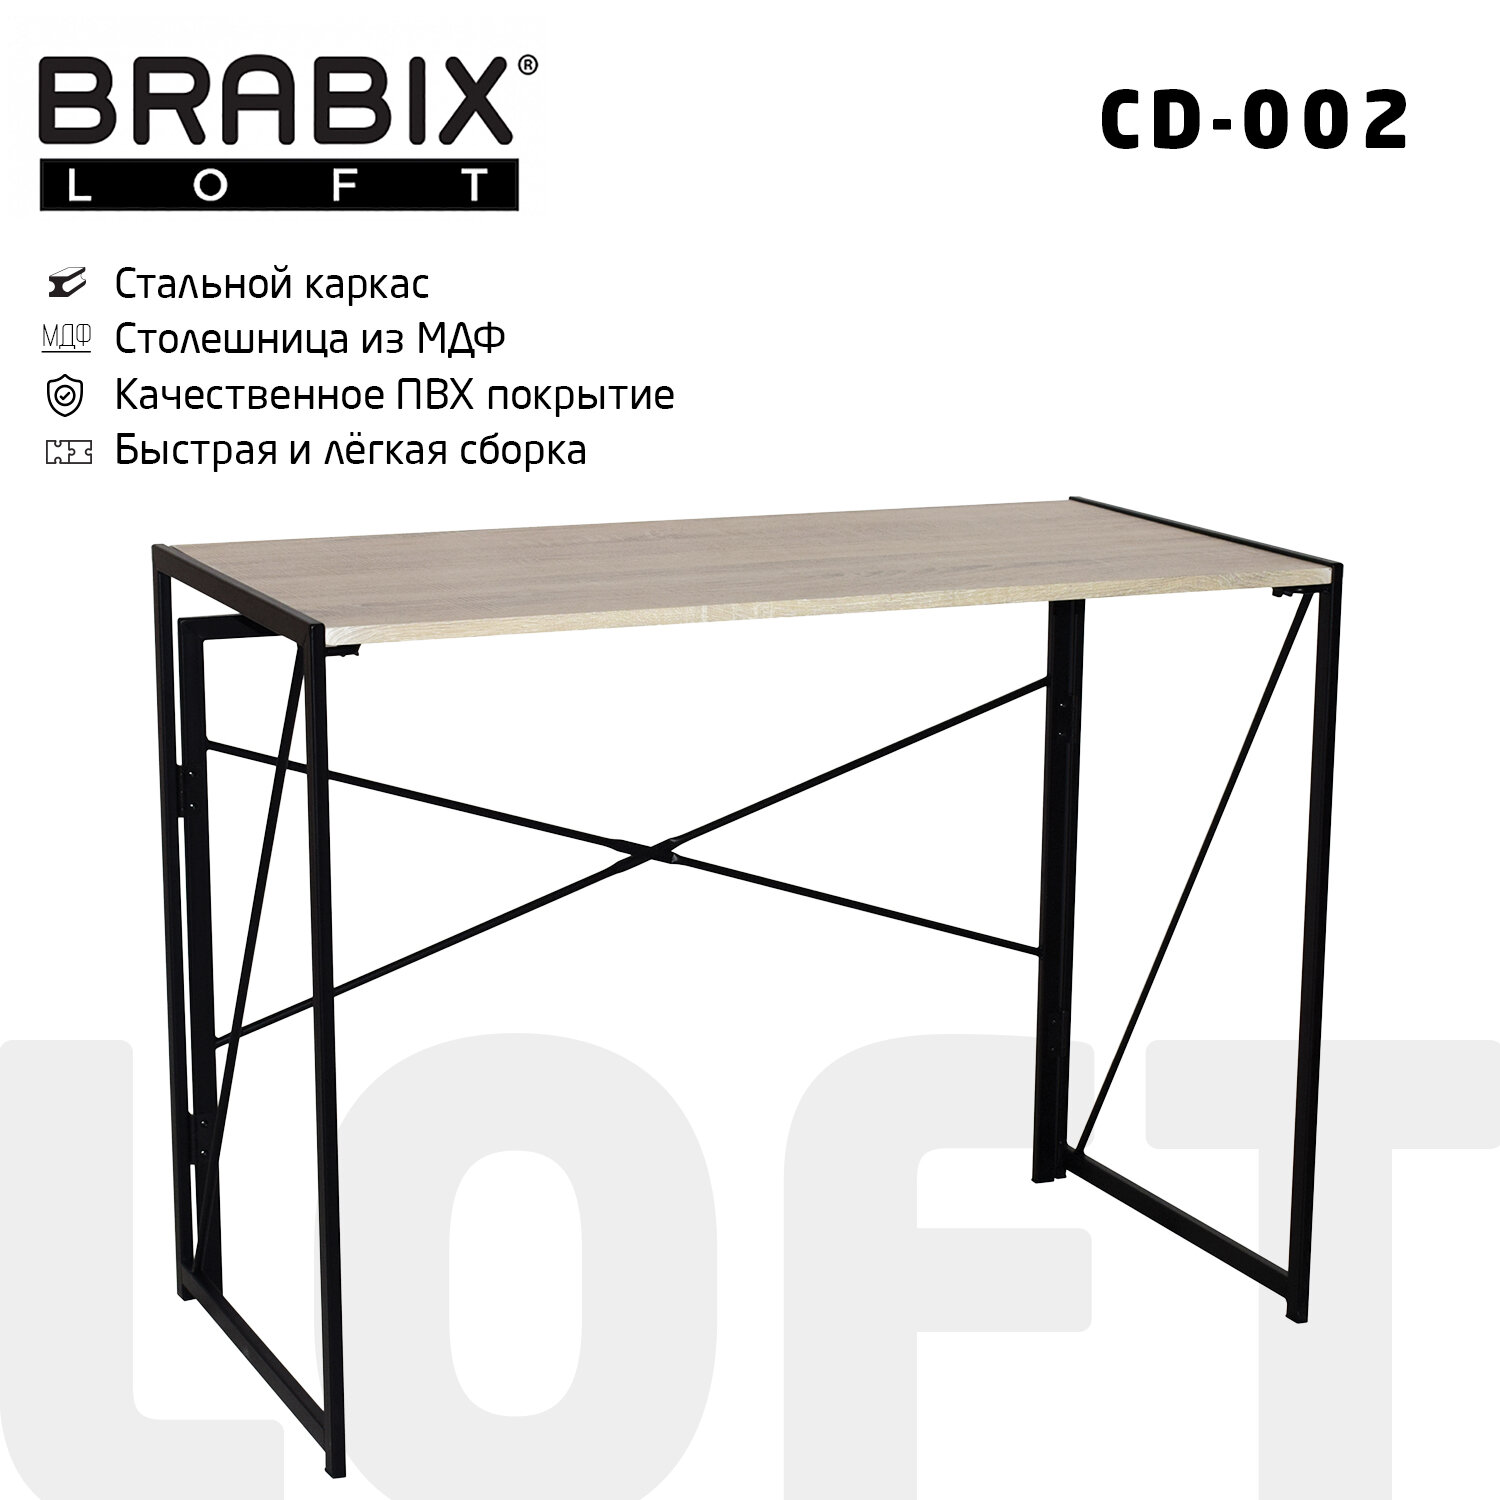 Brabix    BRABIX LOFT CD-002, 1000500750 , ,   , 641214